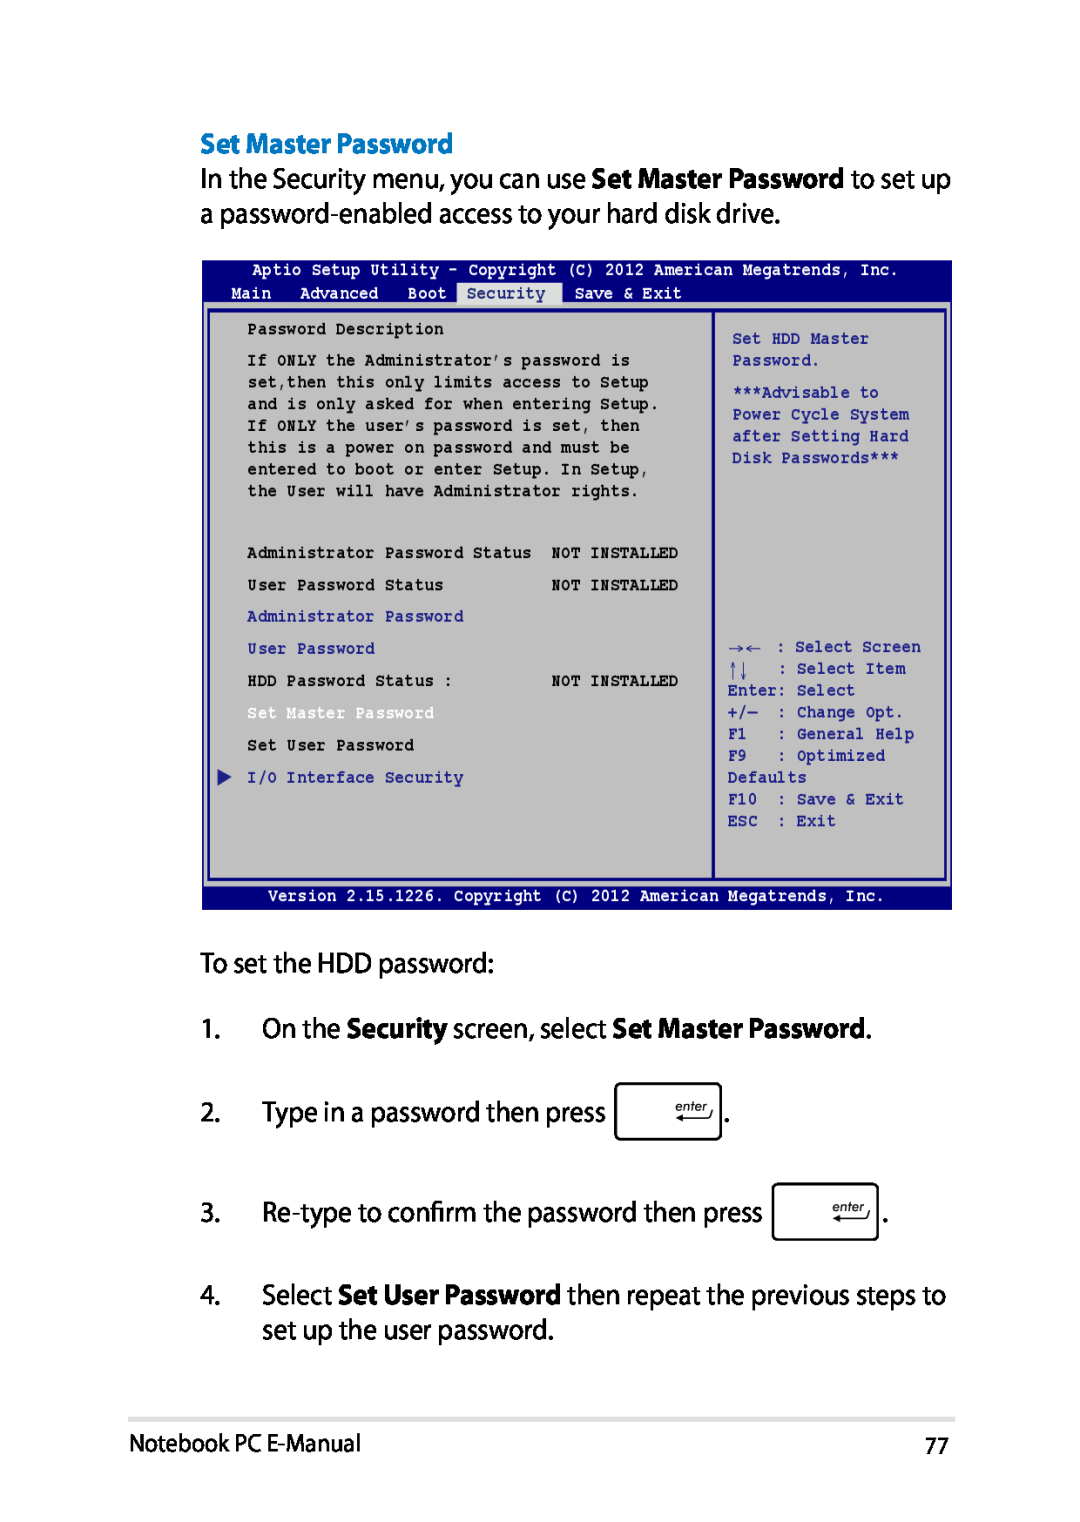 Asus E8438 Set Master Password, Notebook PC E-Manual, Password Description, HDD Password Status, Set User Password 